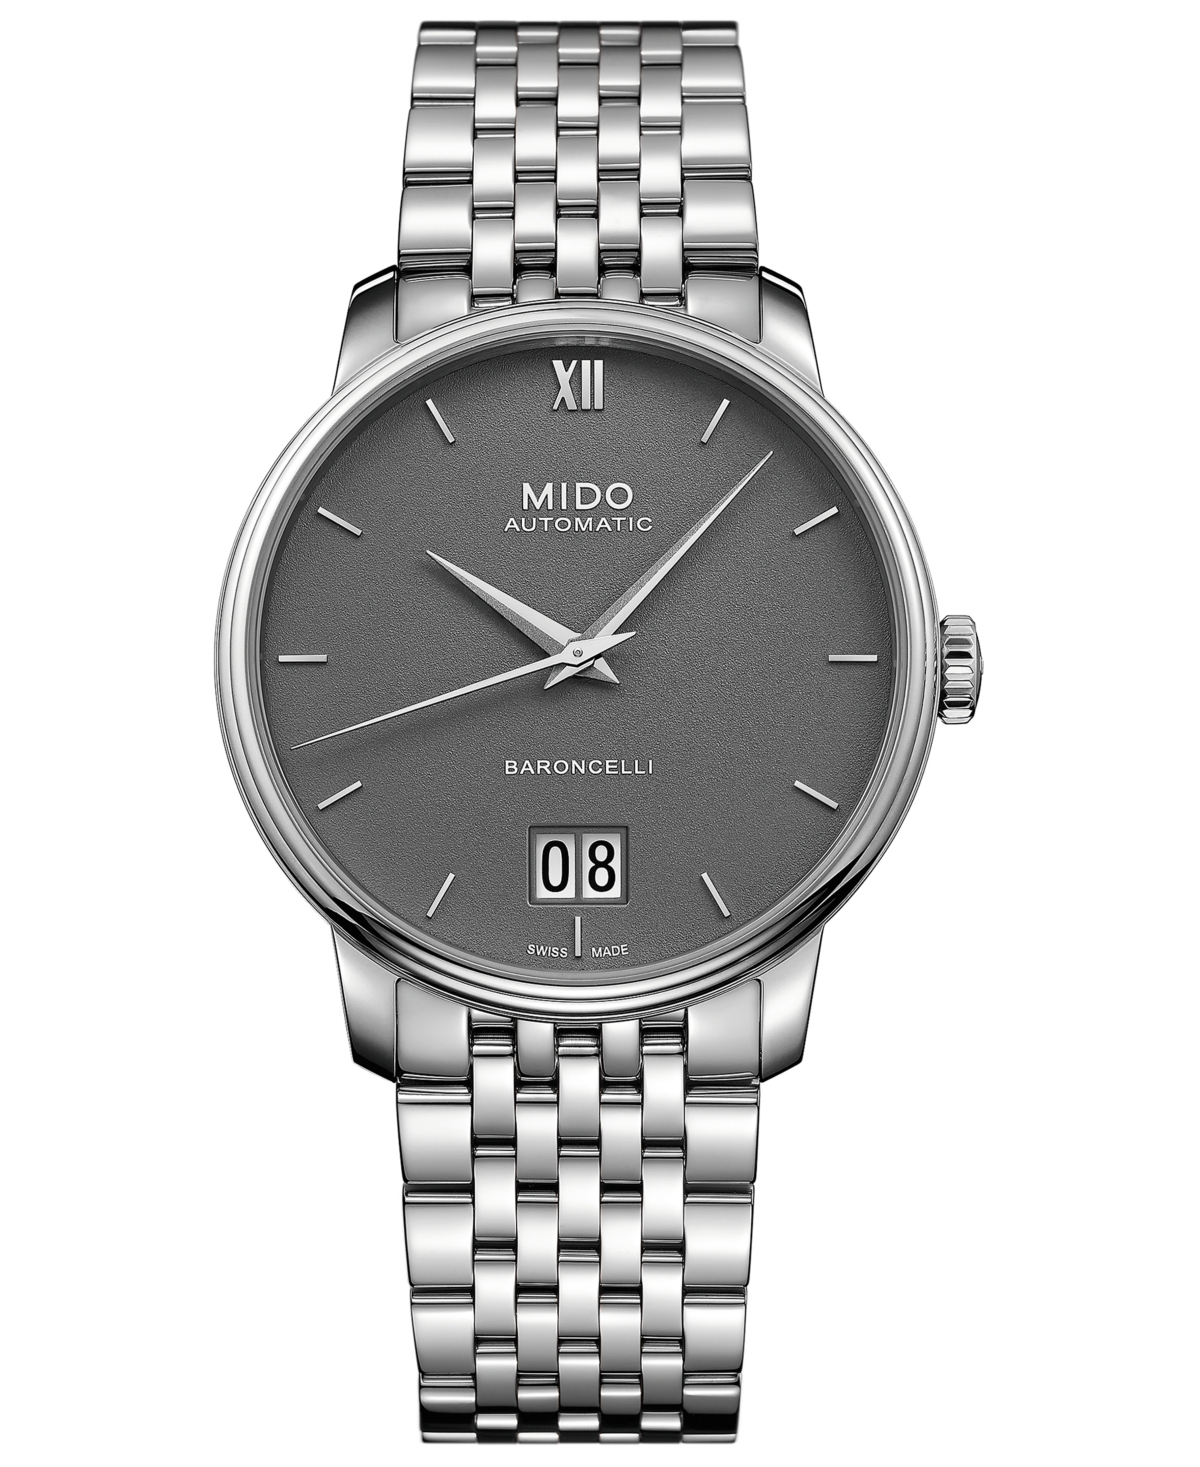 Mido Men's Swiss Automatic Baroncelli Iii Stainless Steel Bracelet Watch 40mm In Metallic